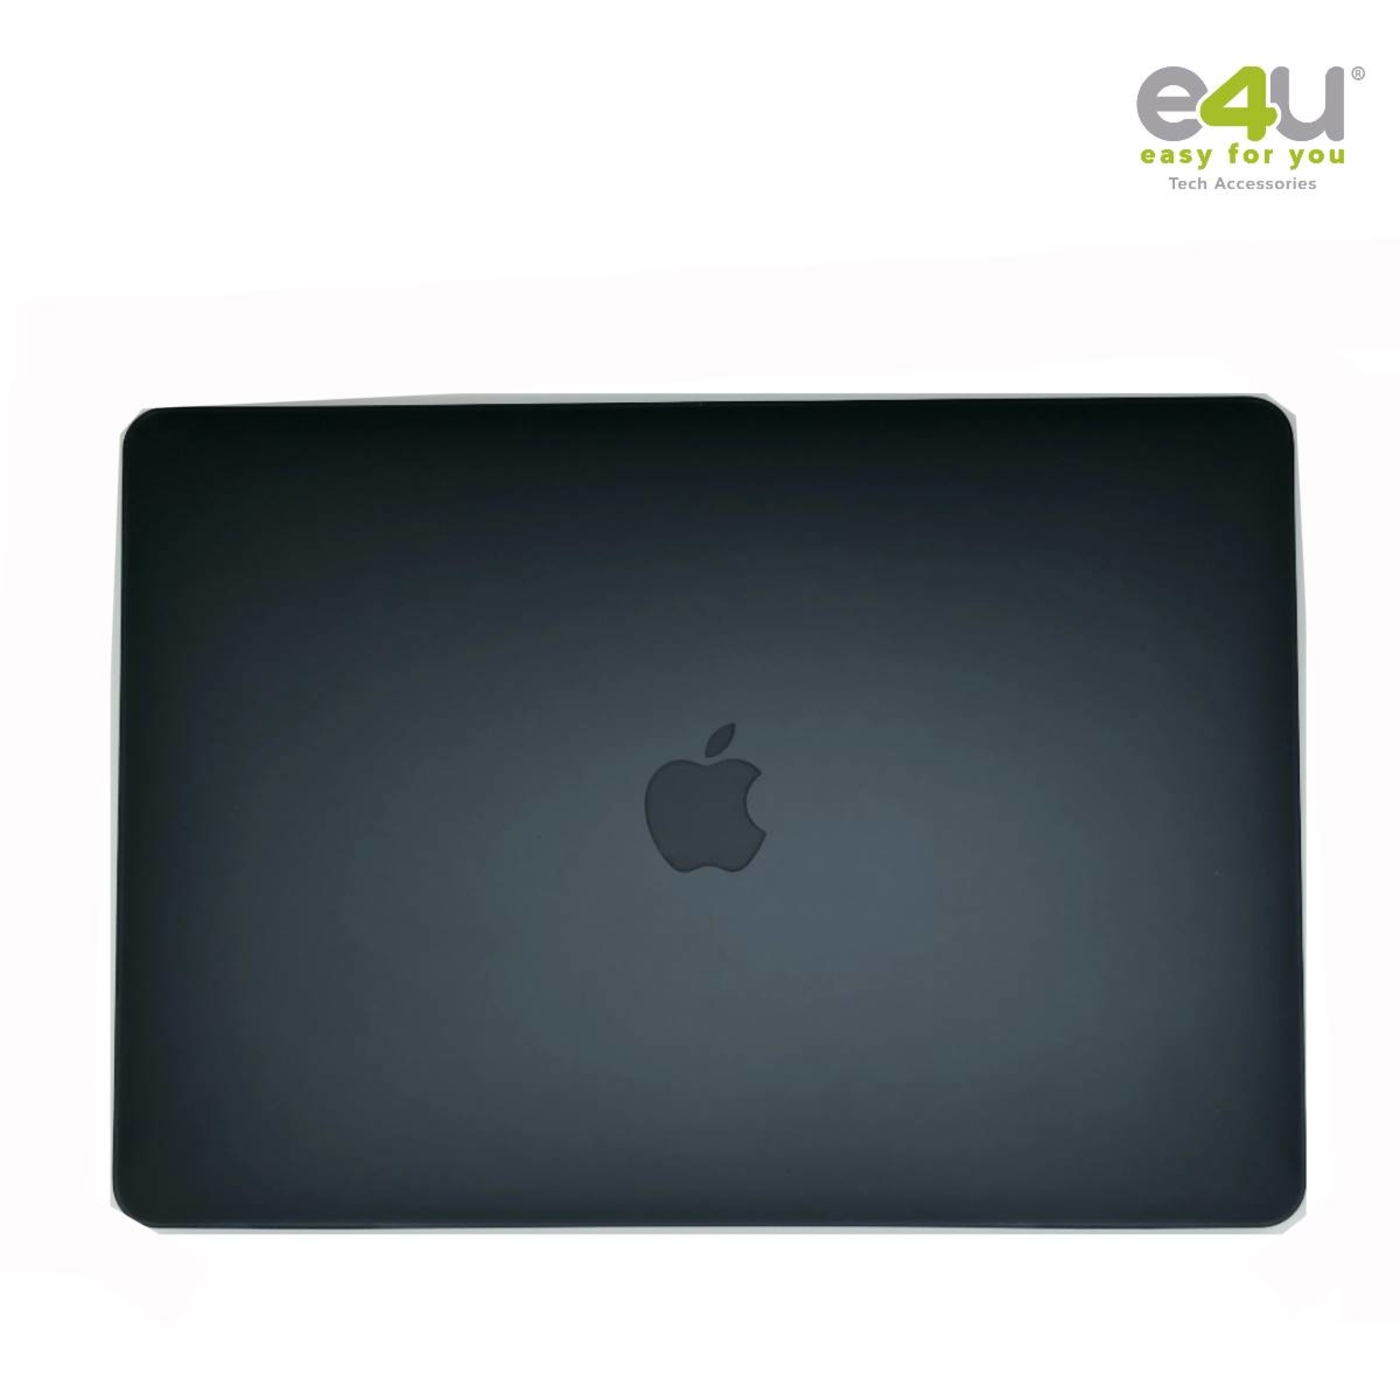 Cover Protector para MacBook Pro 13" Negro Mate